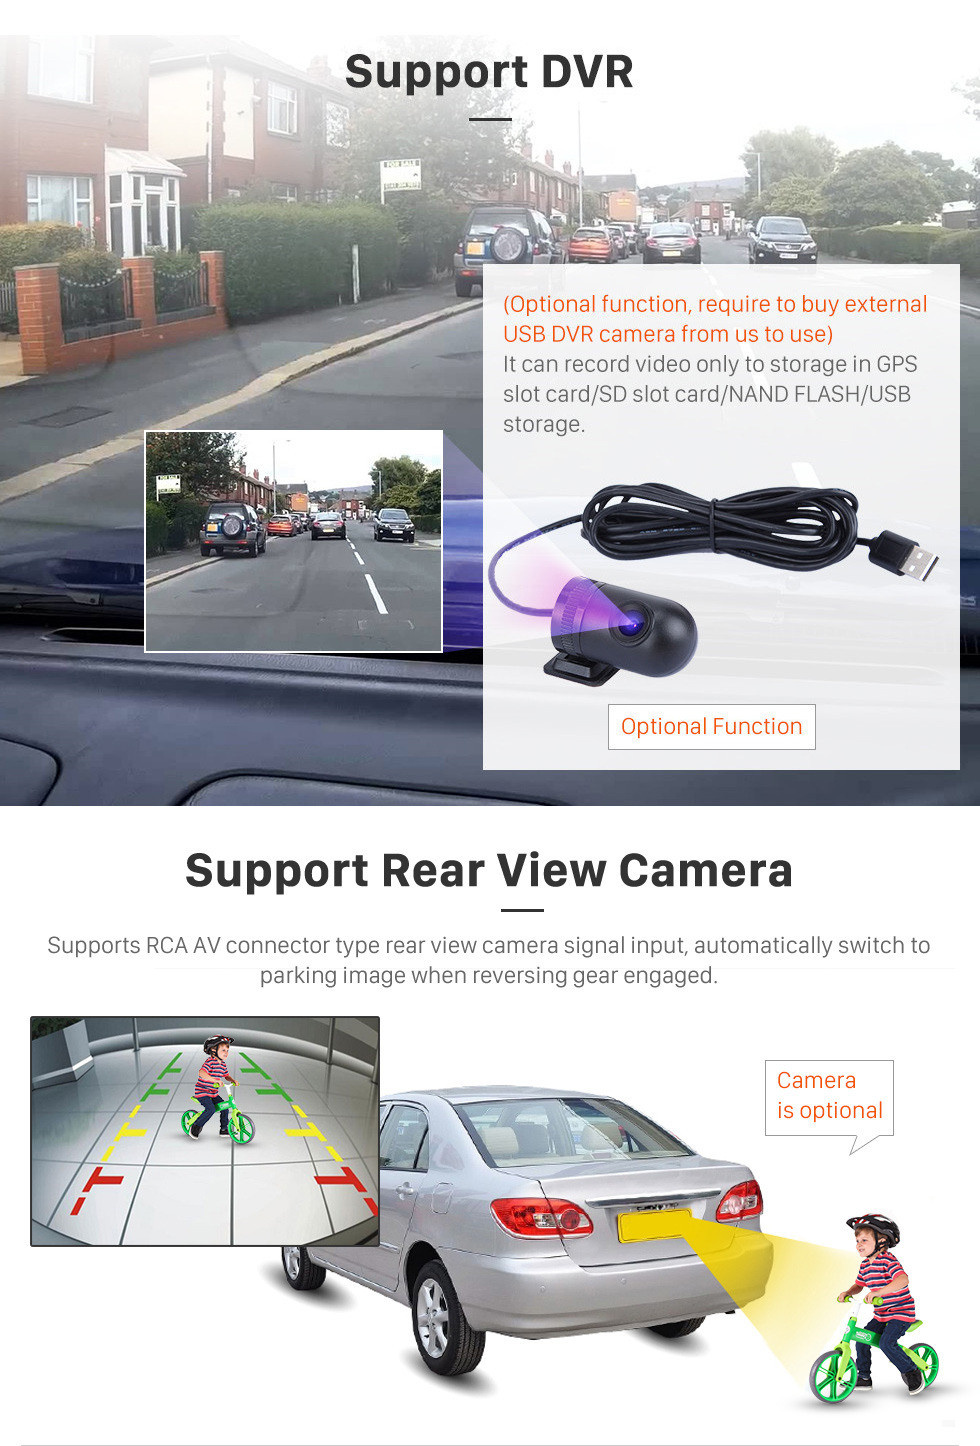 Seicane 10.1 pouces 2017-2018 VW Volkswagen Teramont Android 11.0 Navigation GPS Radio Bluetooth HD Écran tactile AUX USB WIFI Support Carplay OBD2 1080P